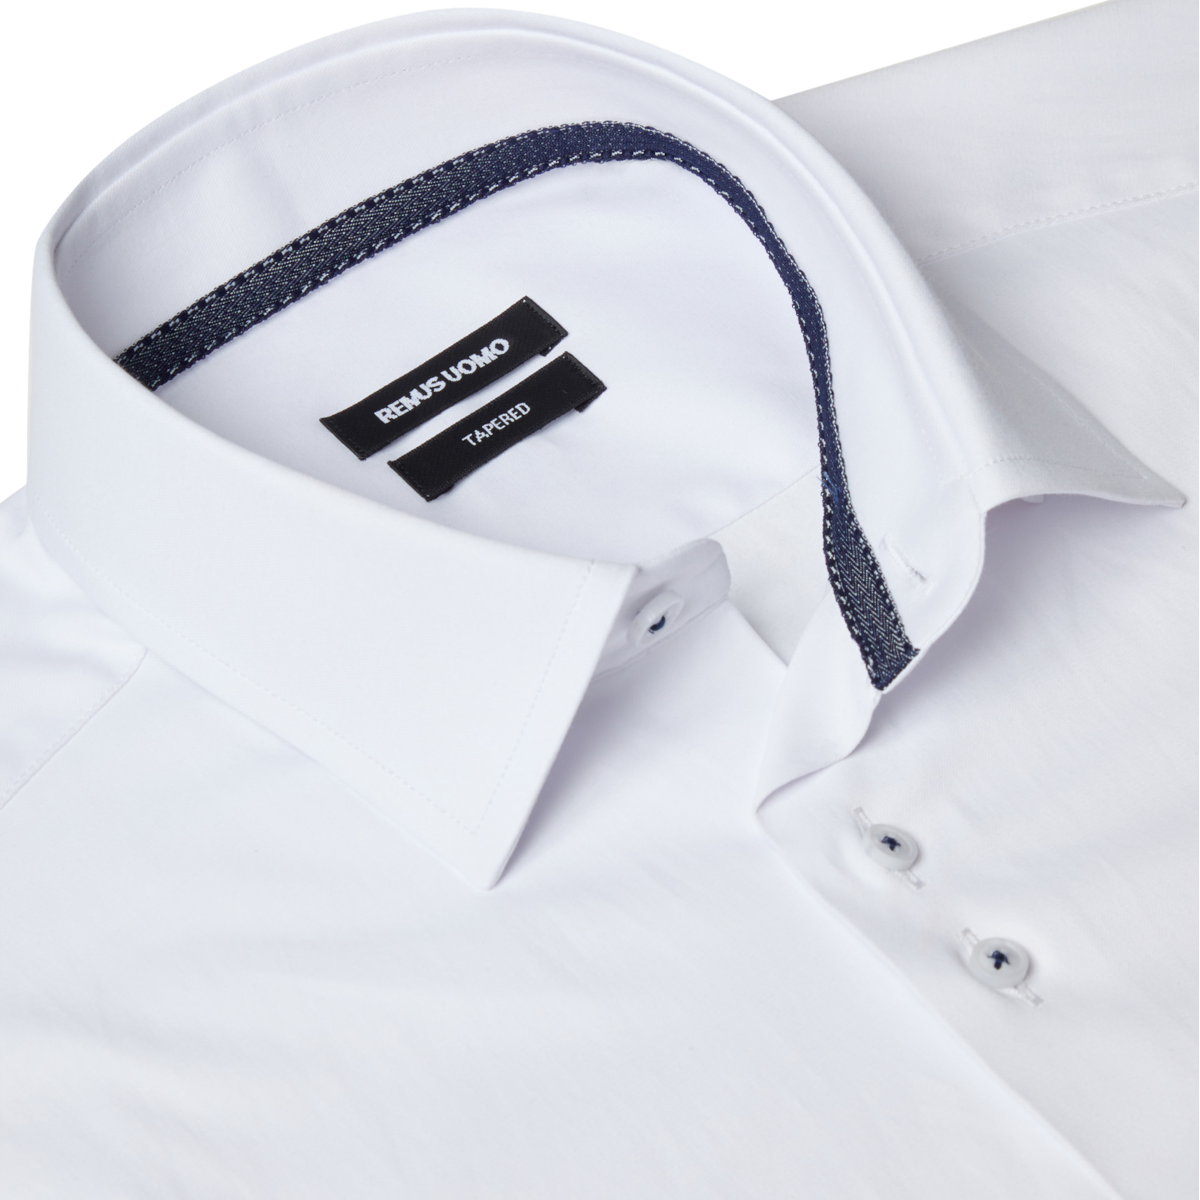 Remus Uomo SS Stretch Semi Formal Shirt 01 White